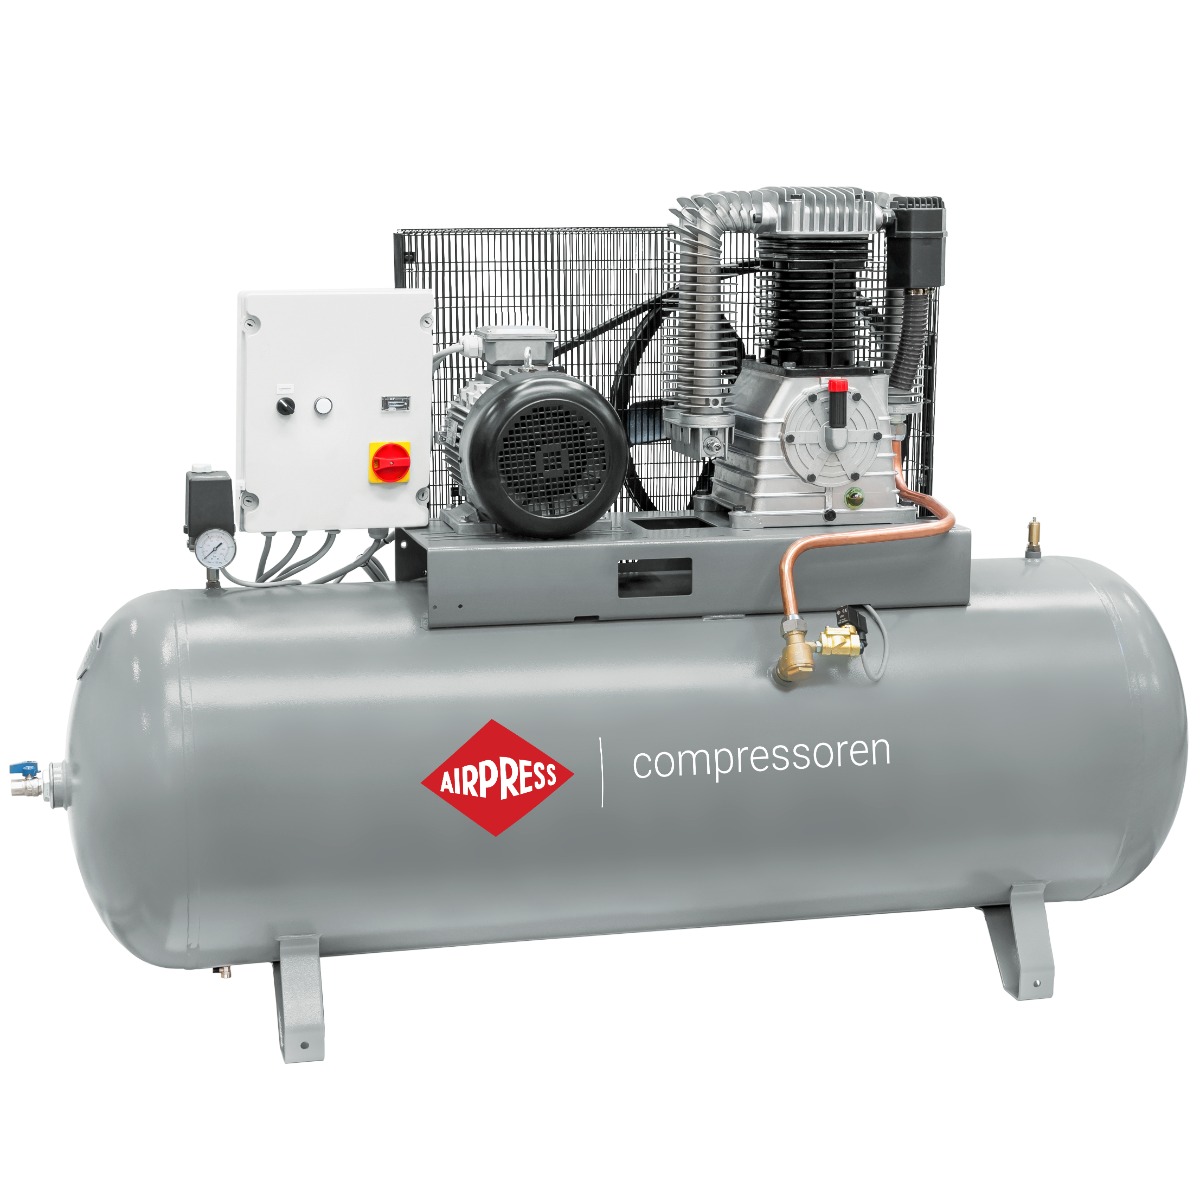 HK 1500-500 SD Pro compressor